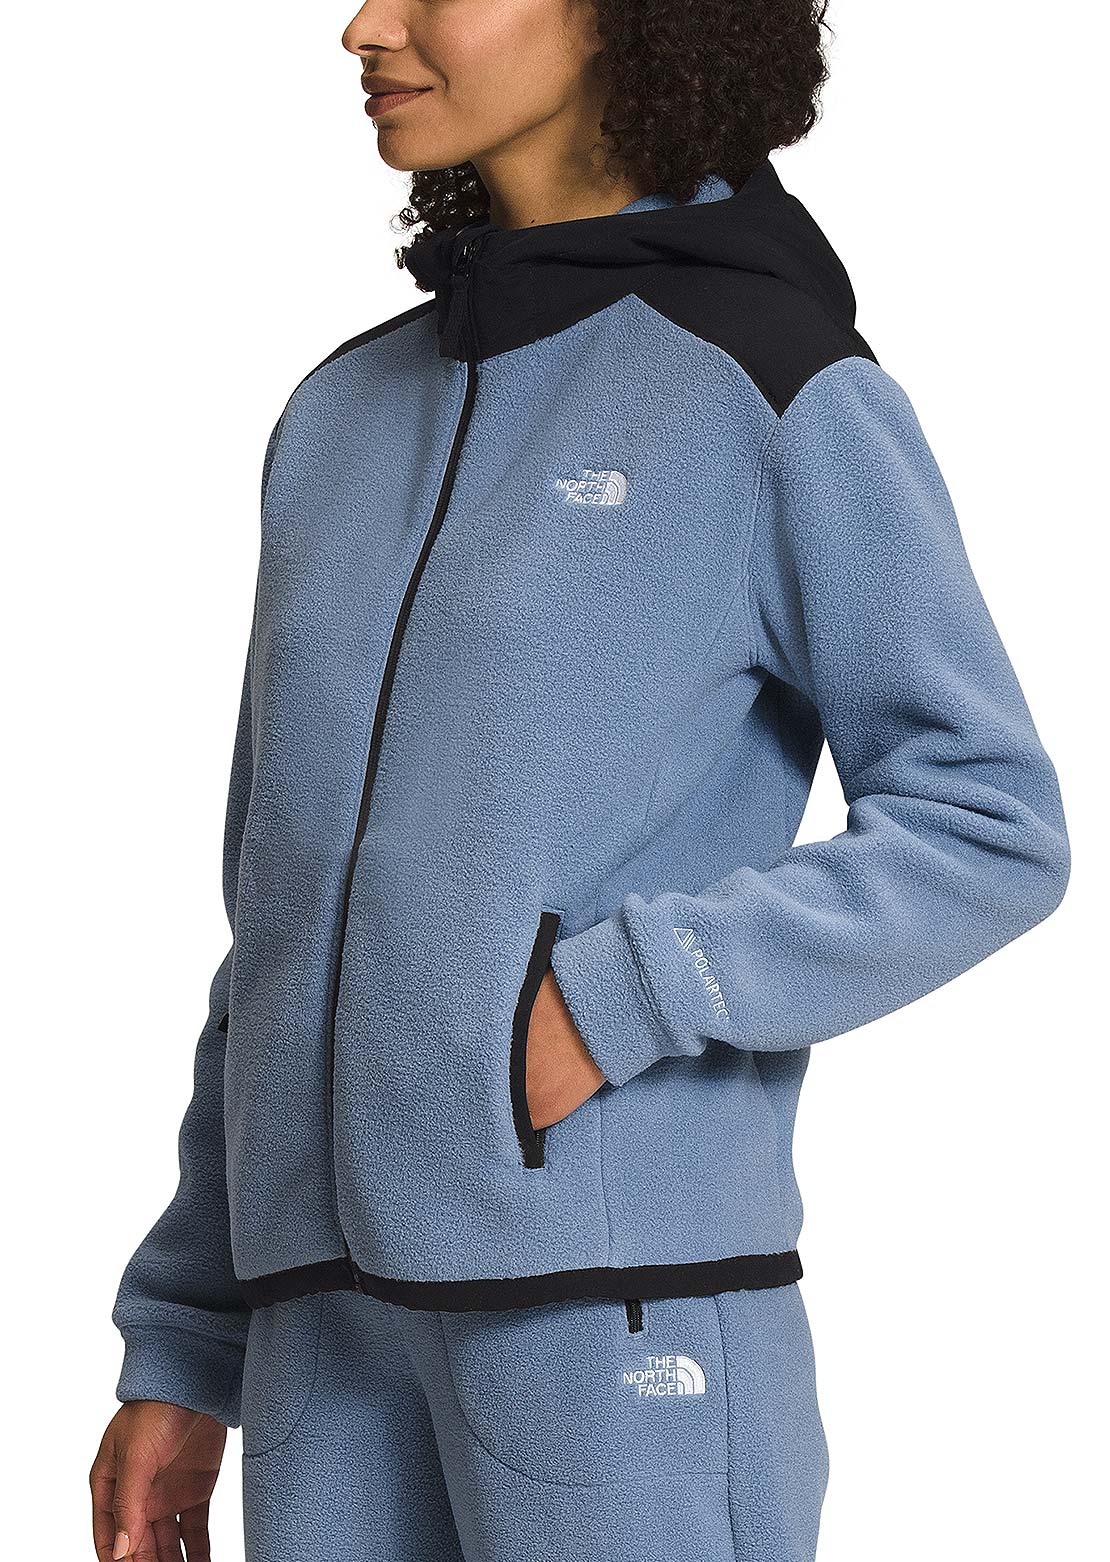 The North Face Women's Alpine Polartec 200 Full Zip Hooded Jacket